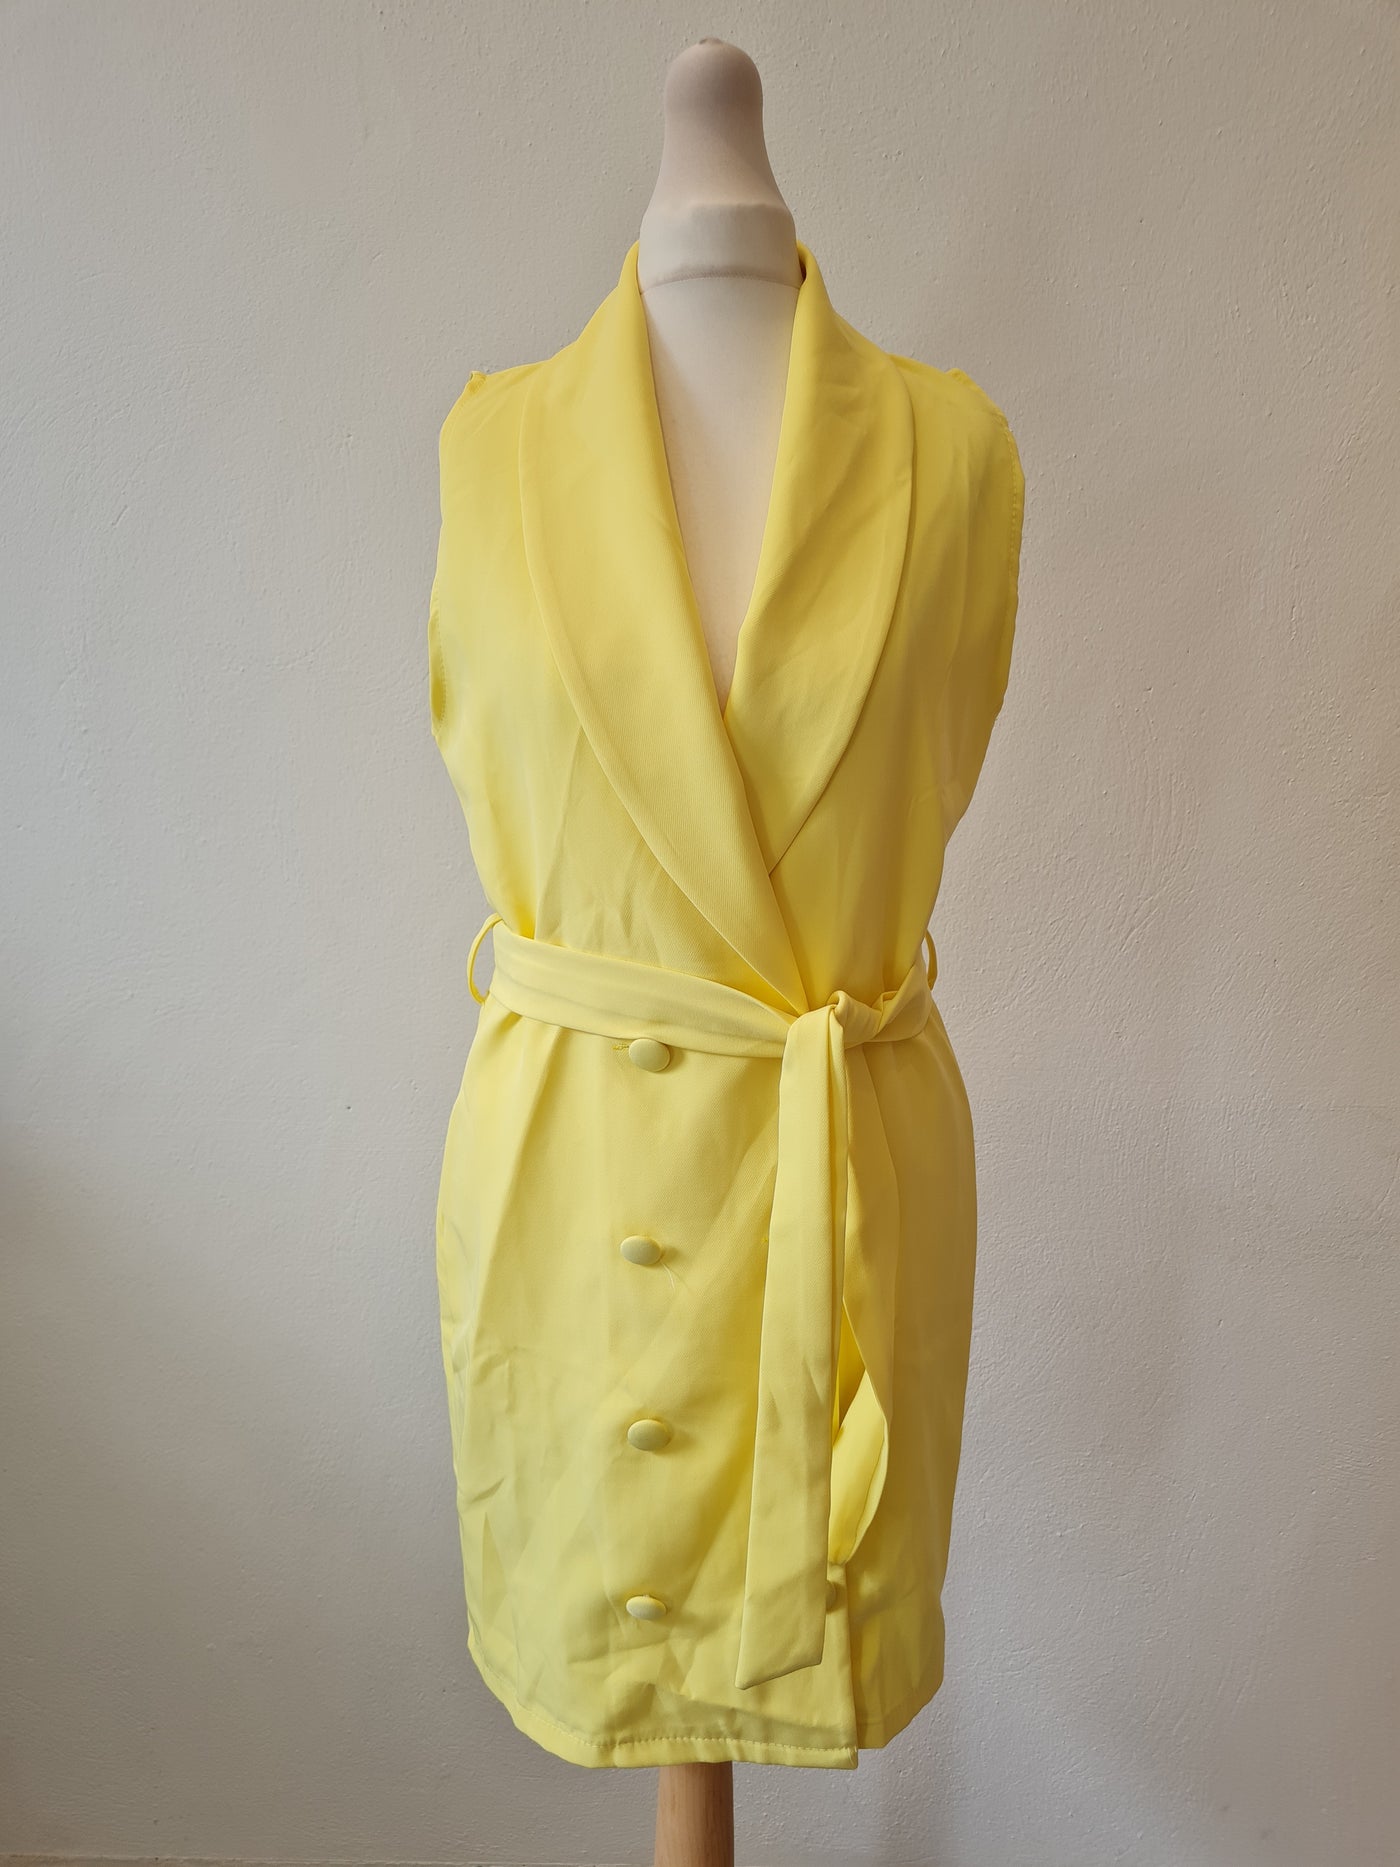 BooHoo Lemon double breasted blazer/dress Size 8 (New)